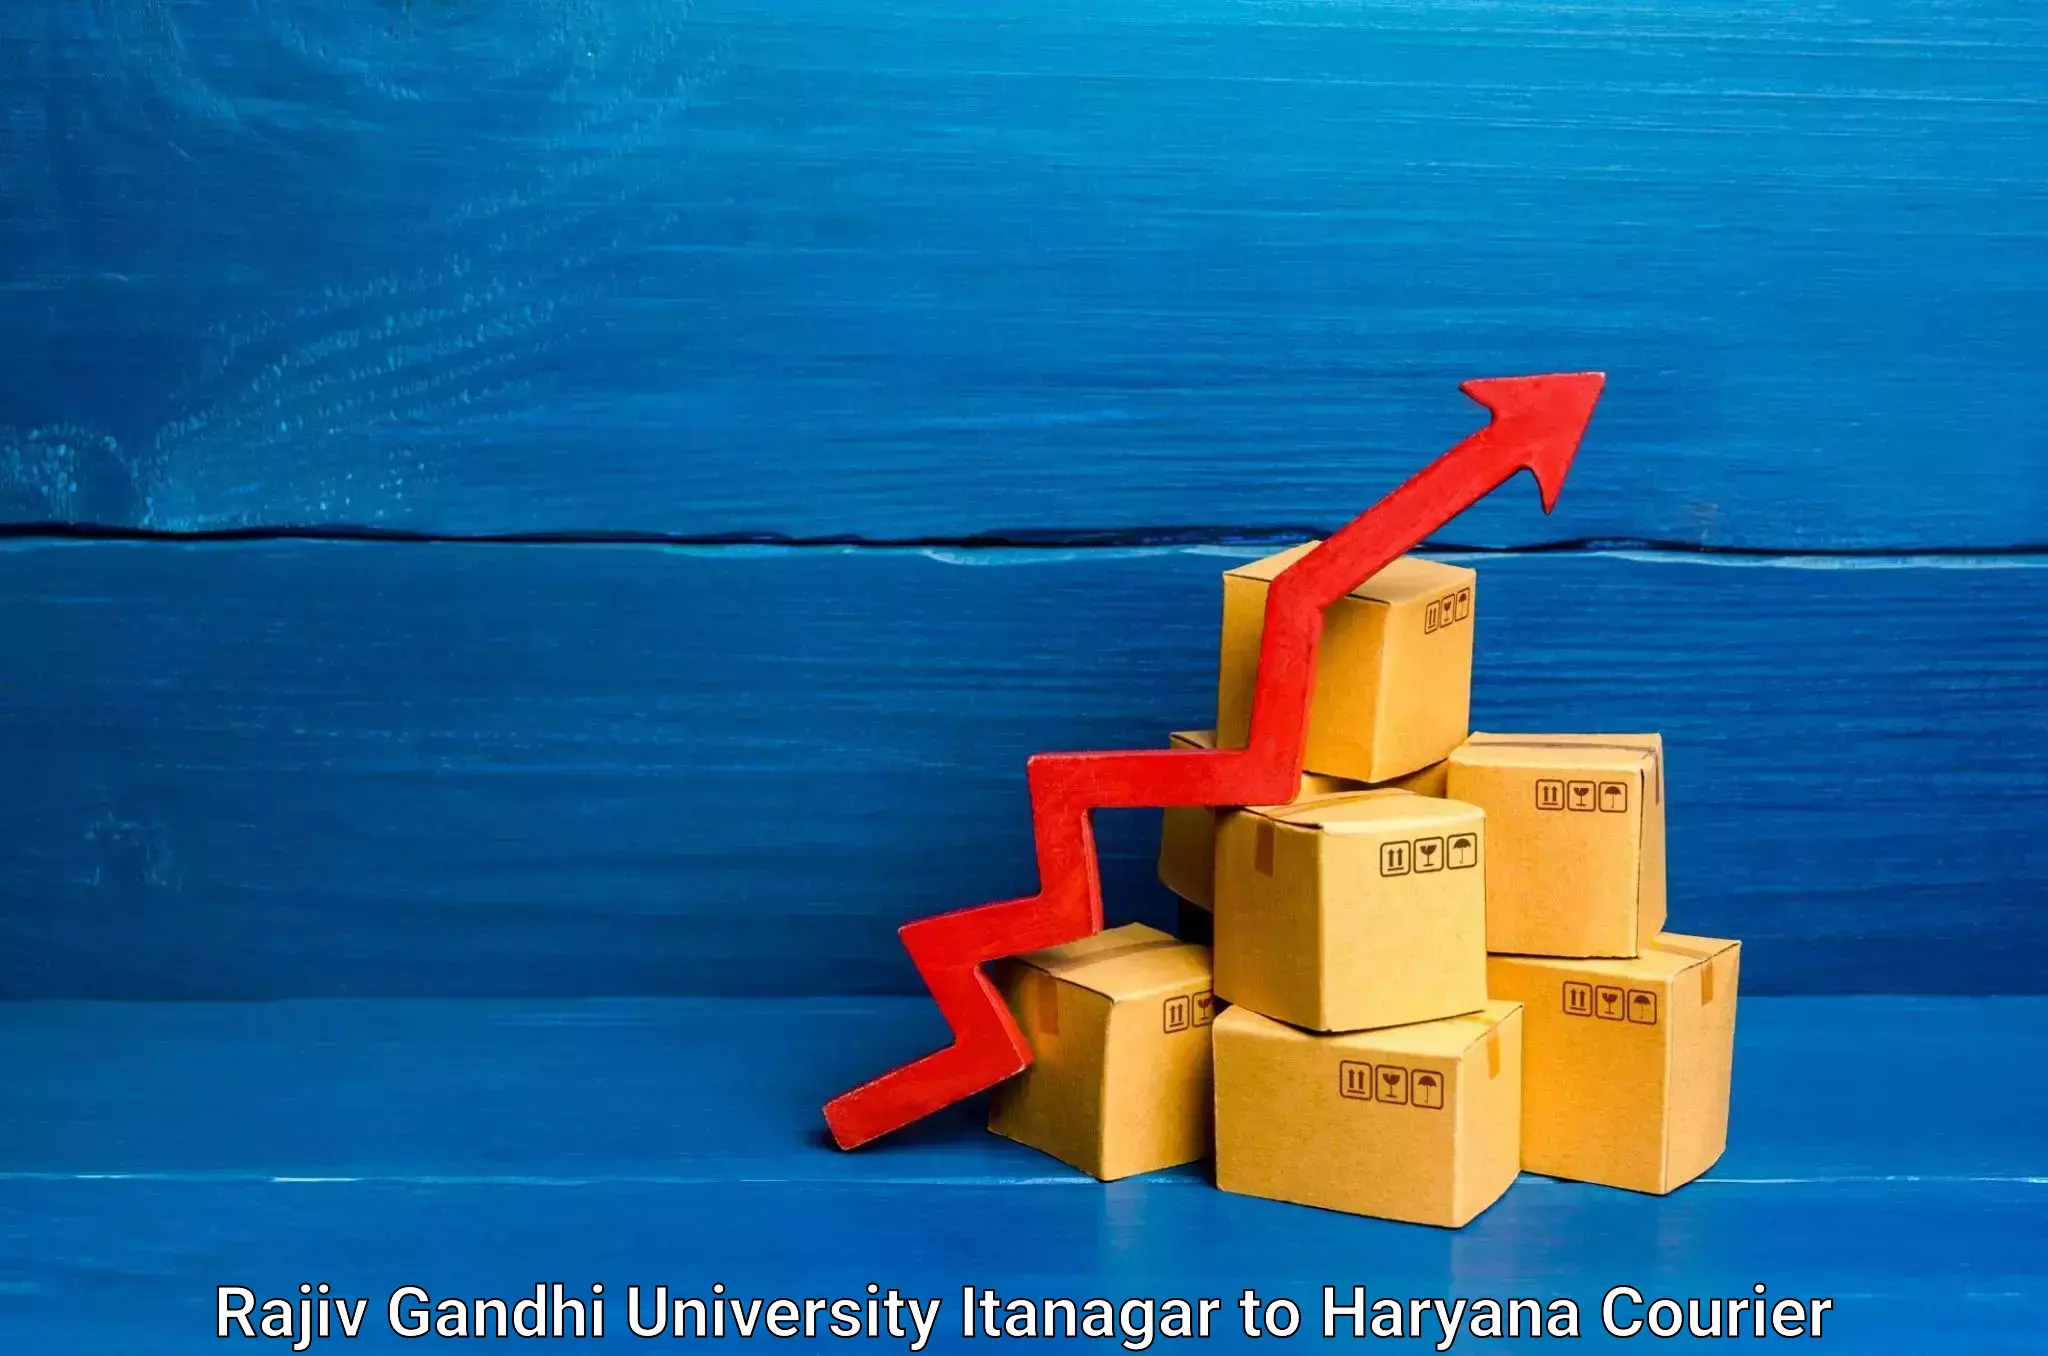 Courier service comparison in Rajiv Gandhi University Itanagar to Panchkula